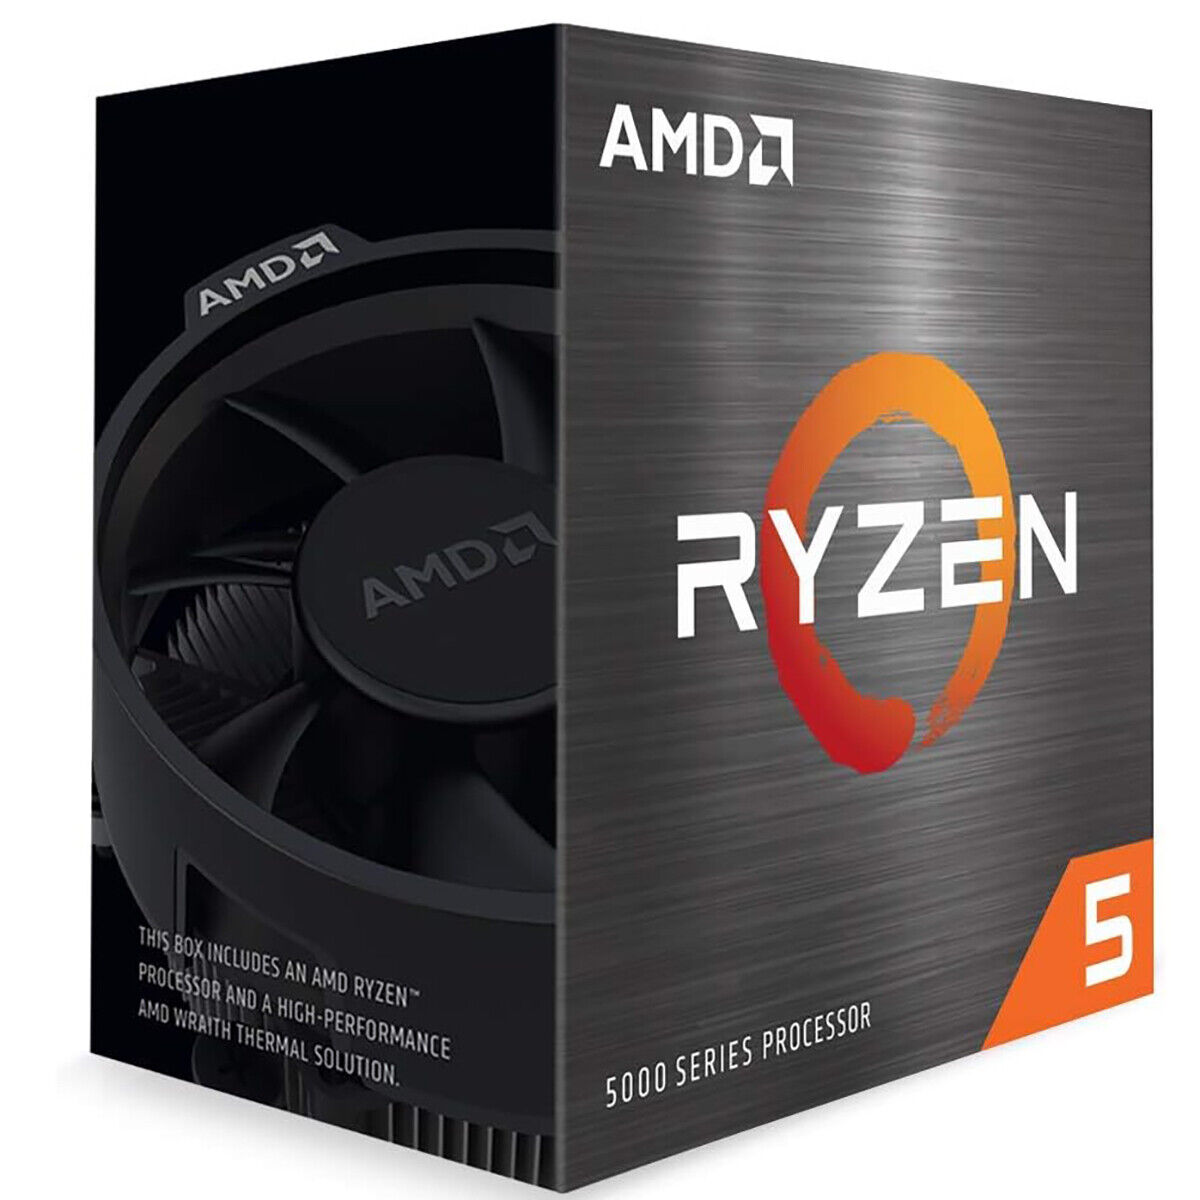 AMD Ryzen 5 5600X 6-core, 12-Thread Unlocked Desktop CPU w/ Stealth Cooler, Open